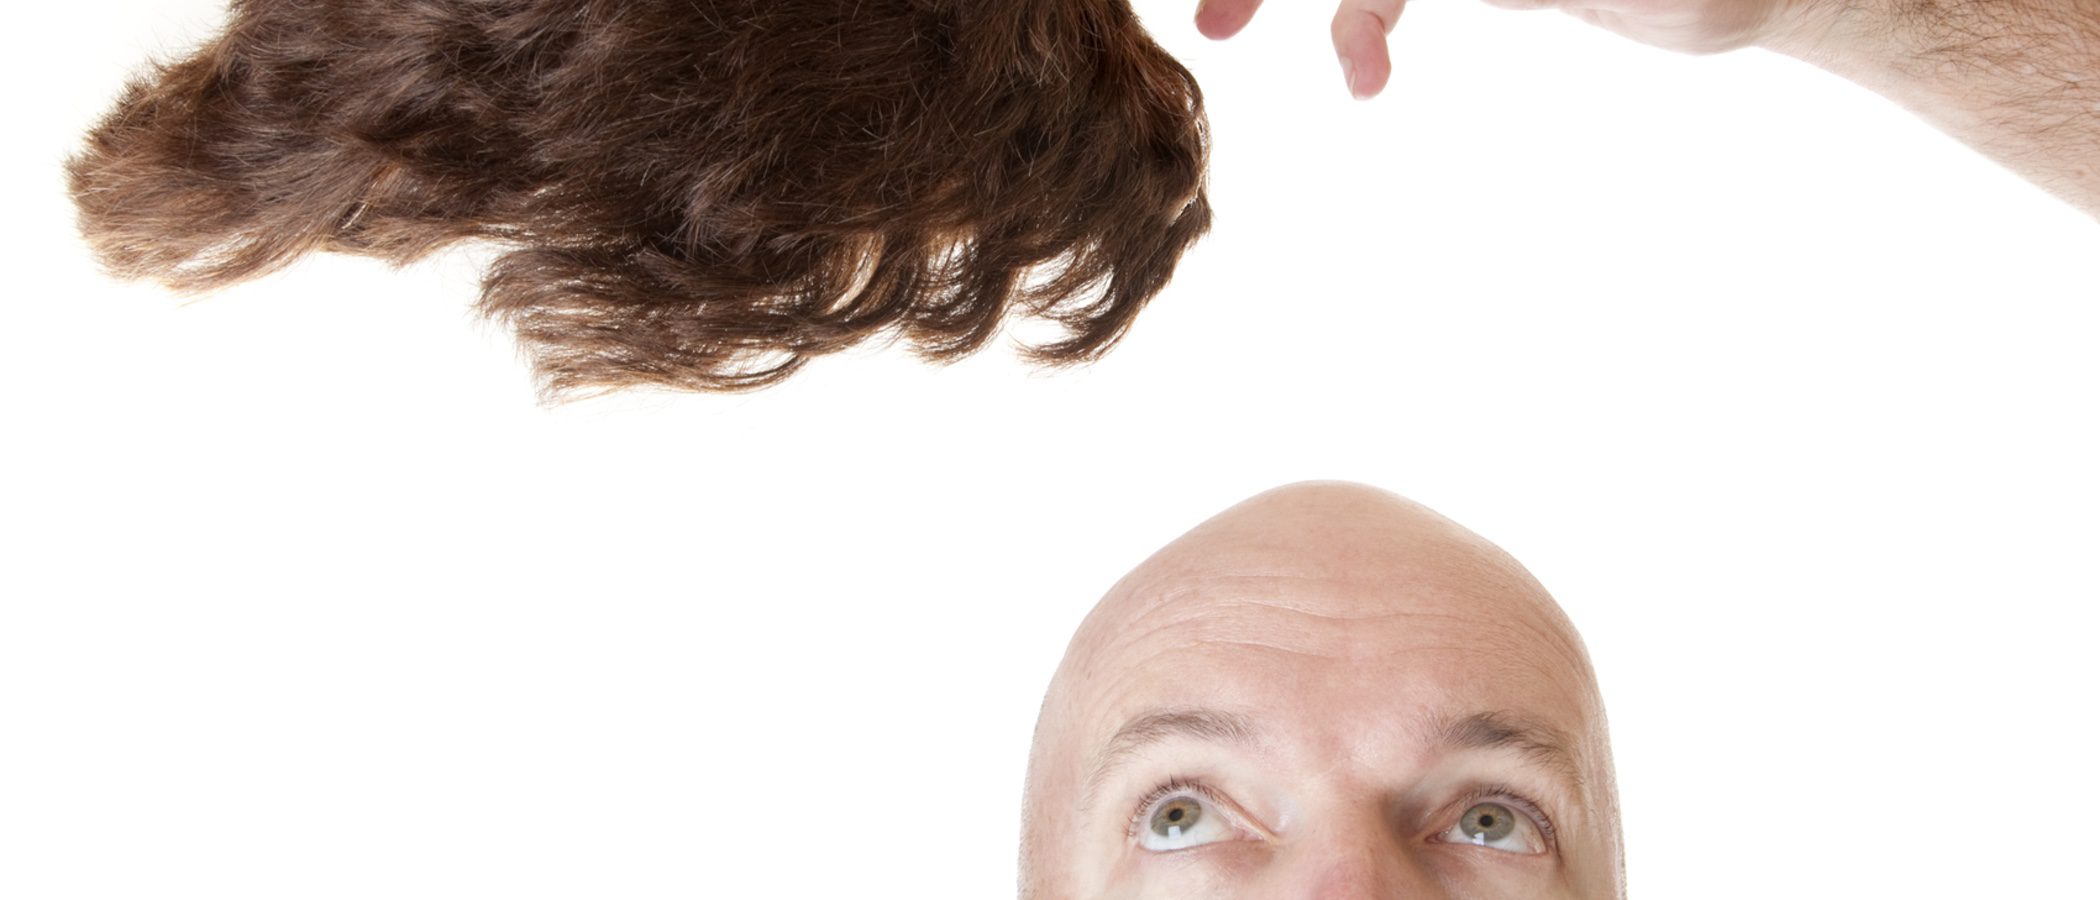 Peluquín: la alternativa para la alopecia